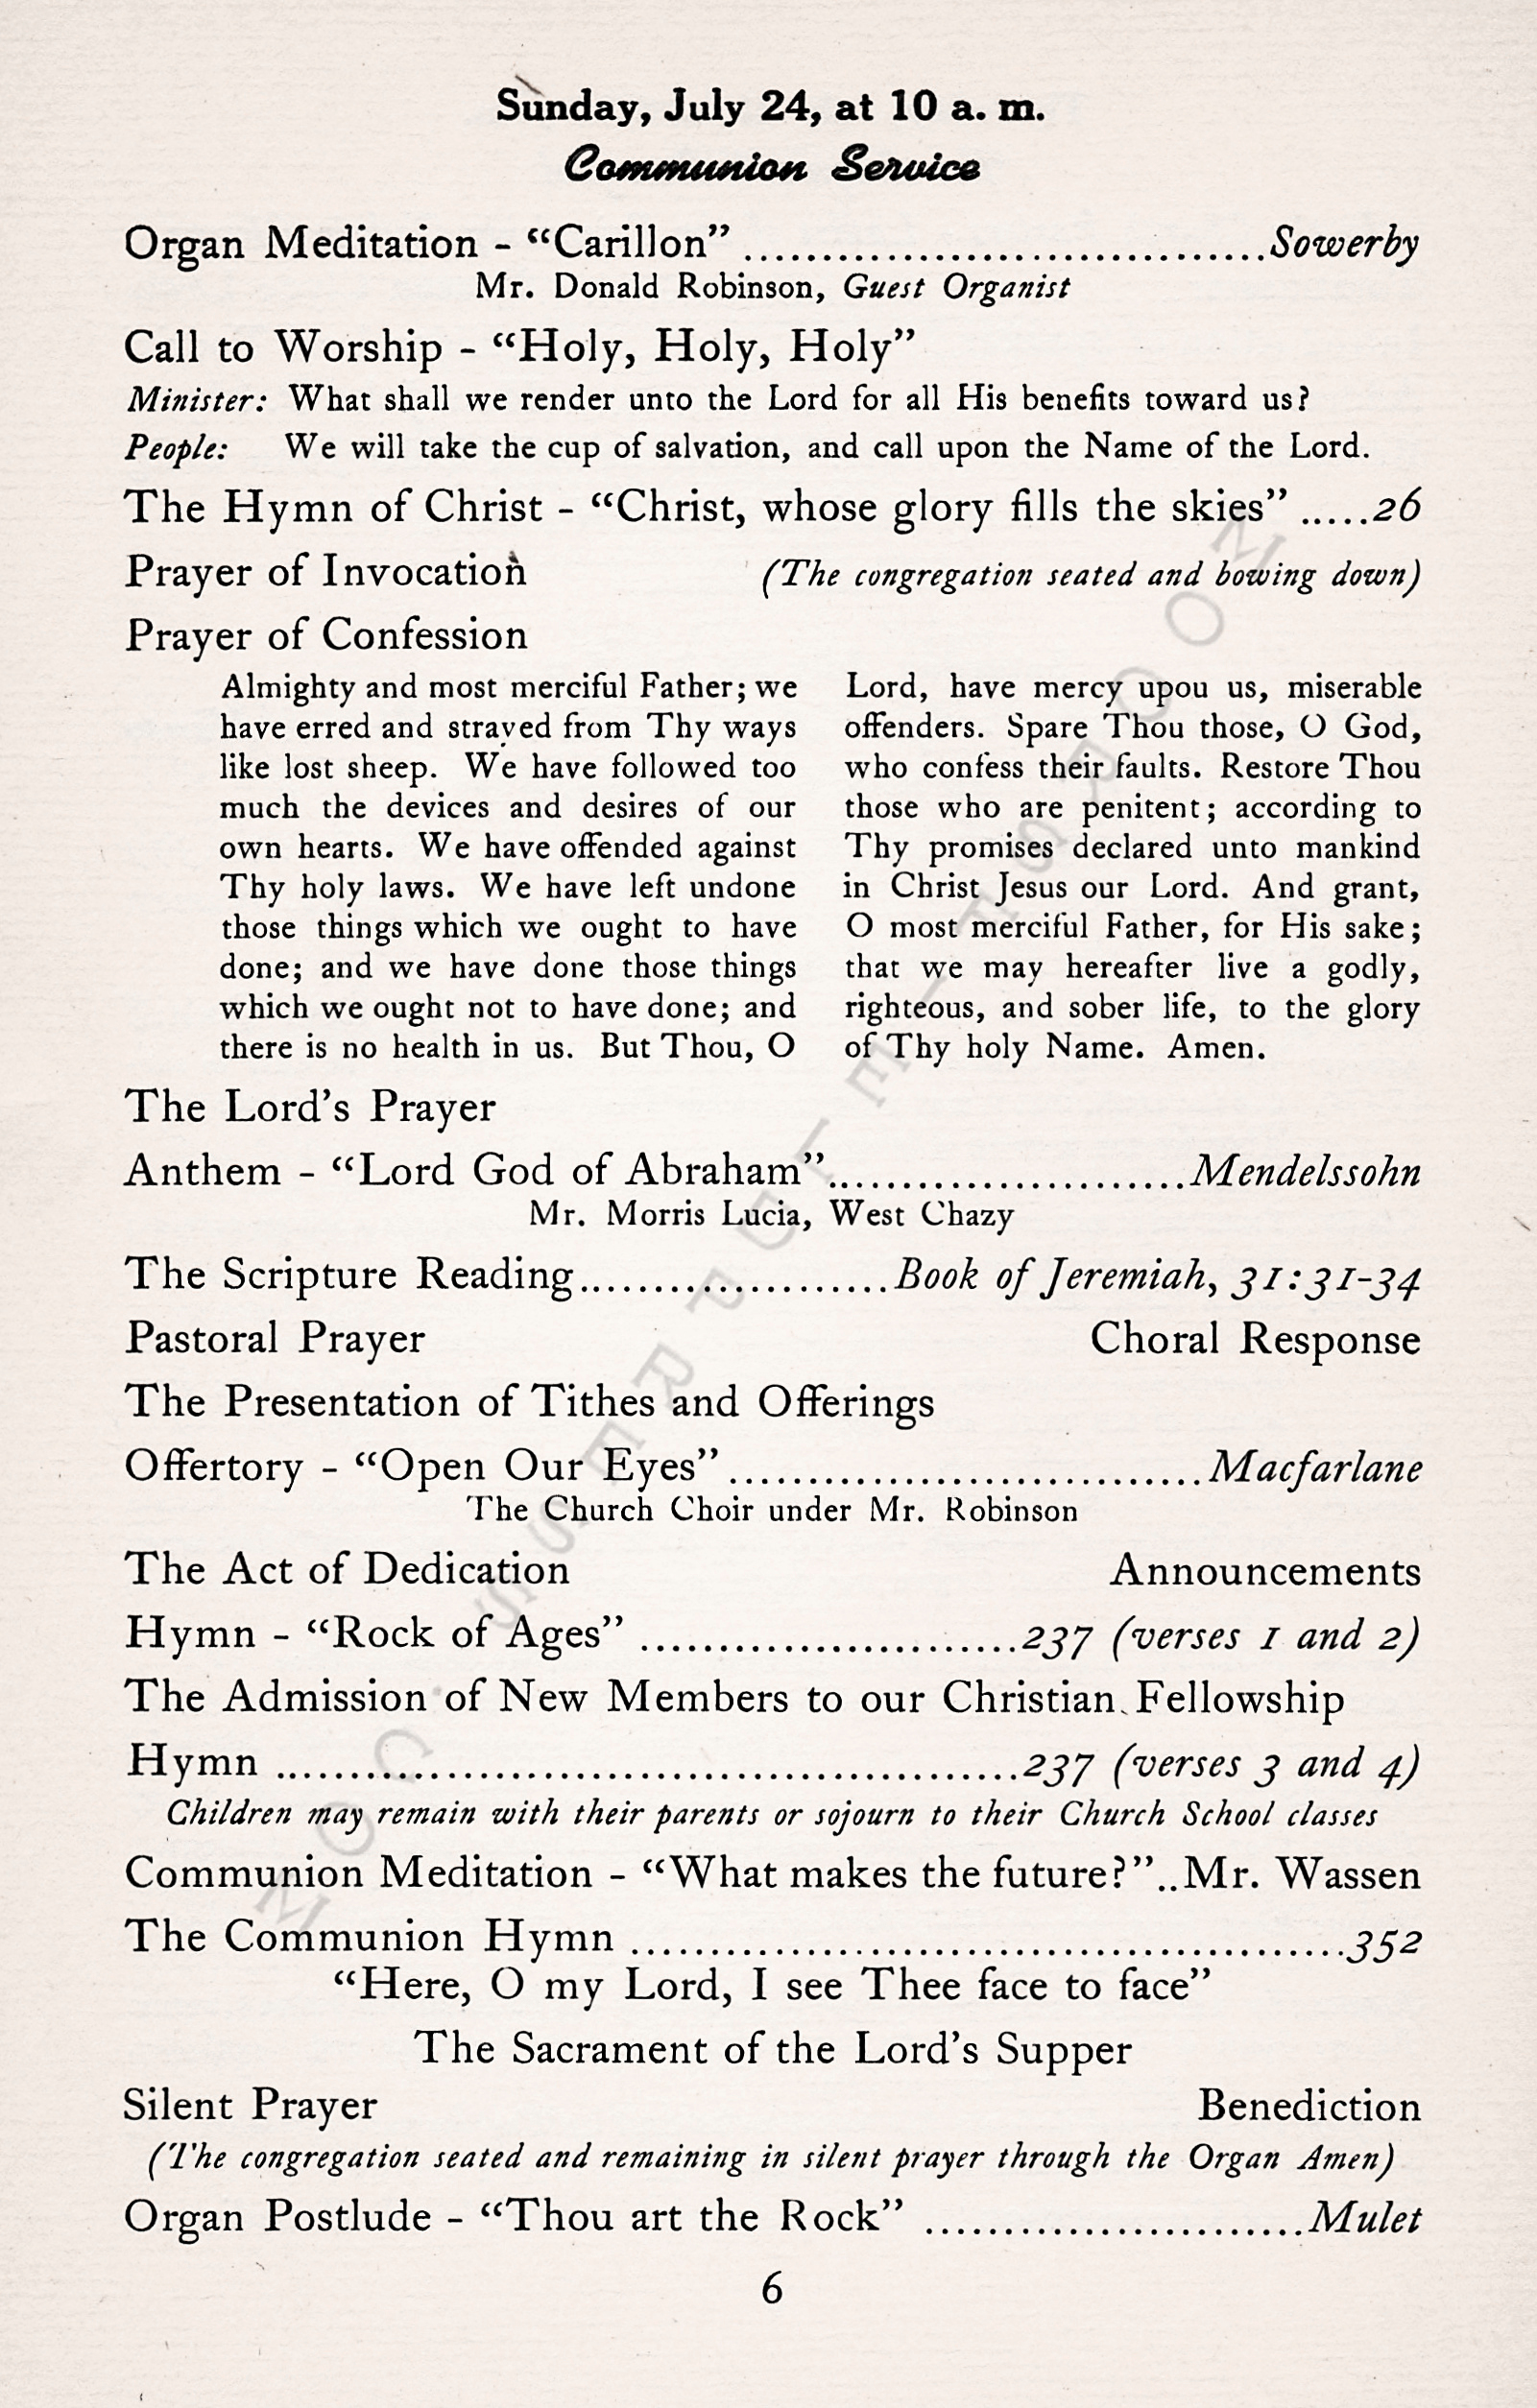 a short
                      history of the presbyterian church of chazy new
                      york 1805-1955